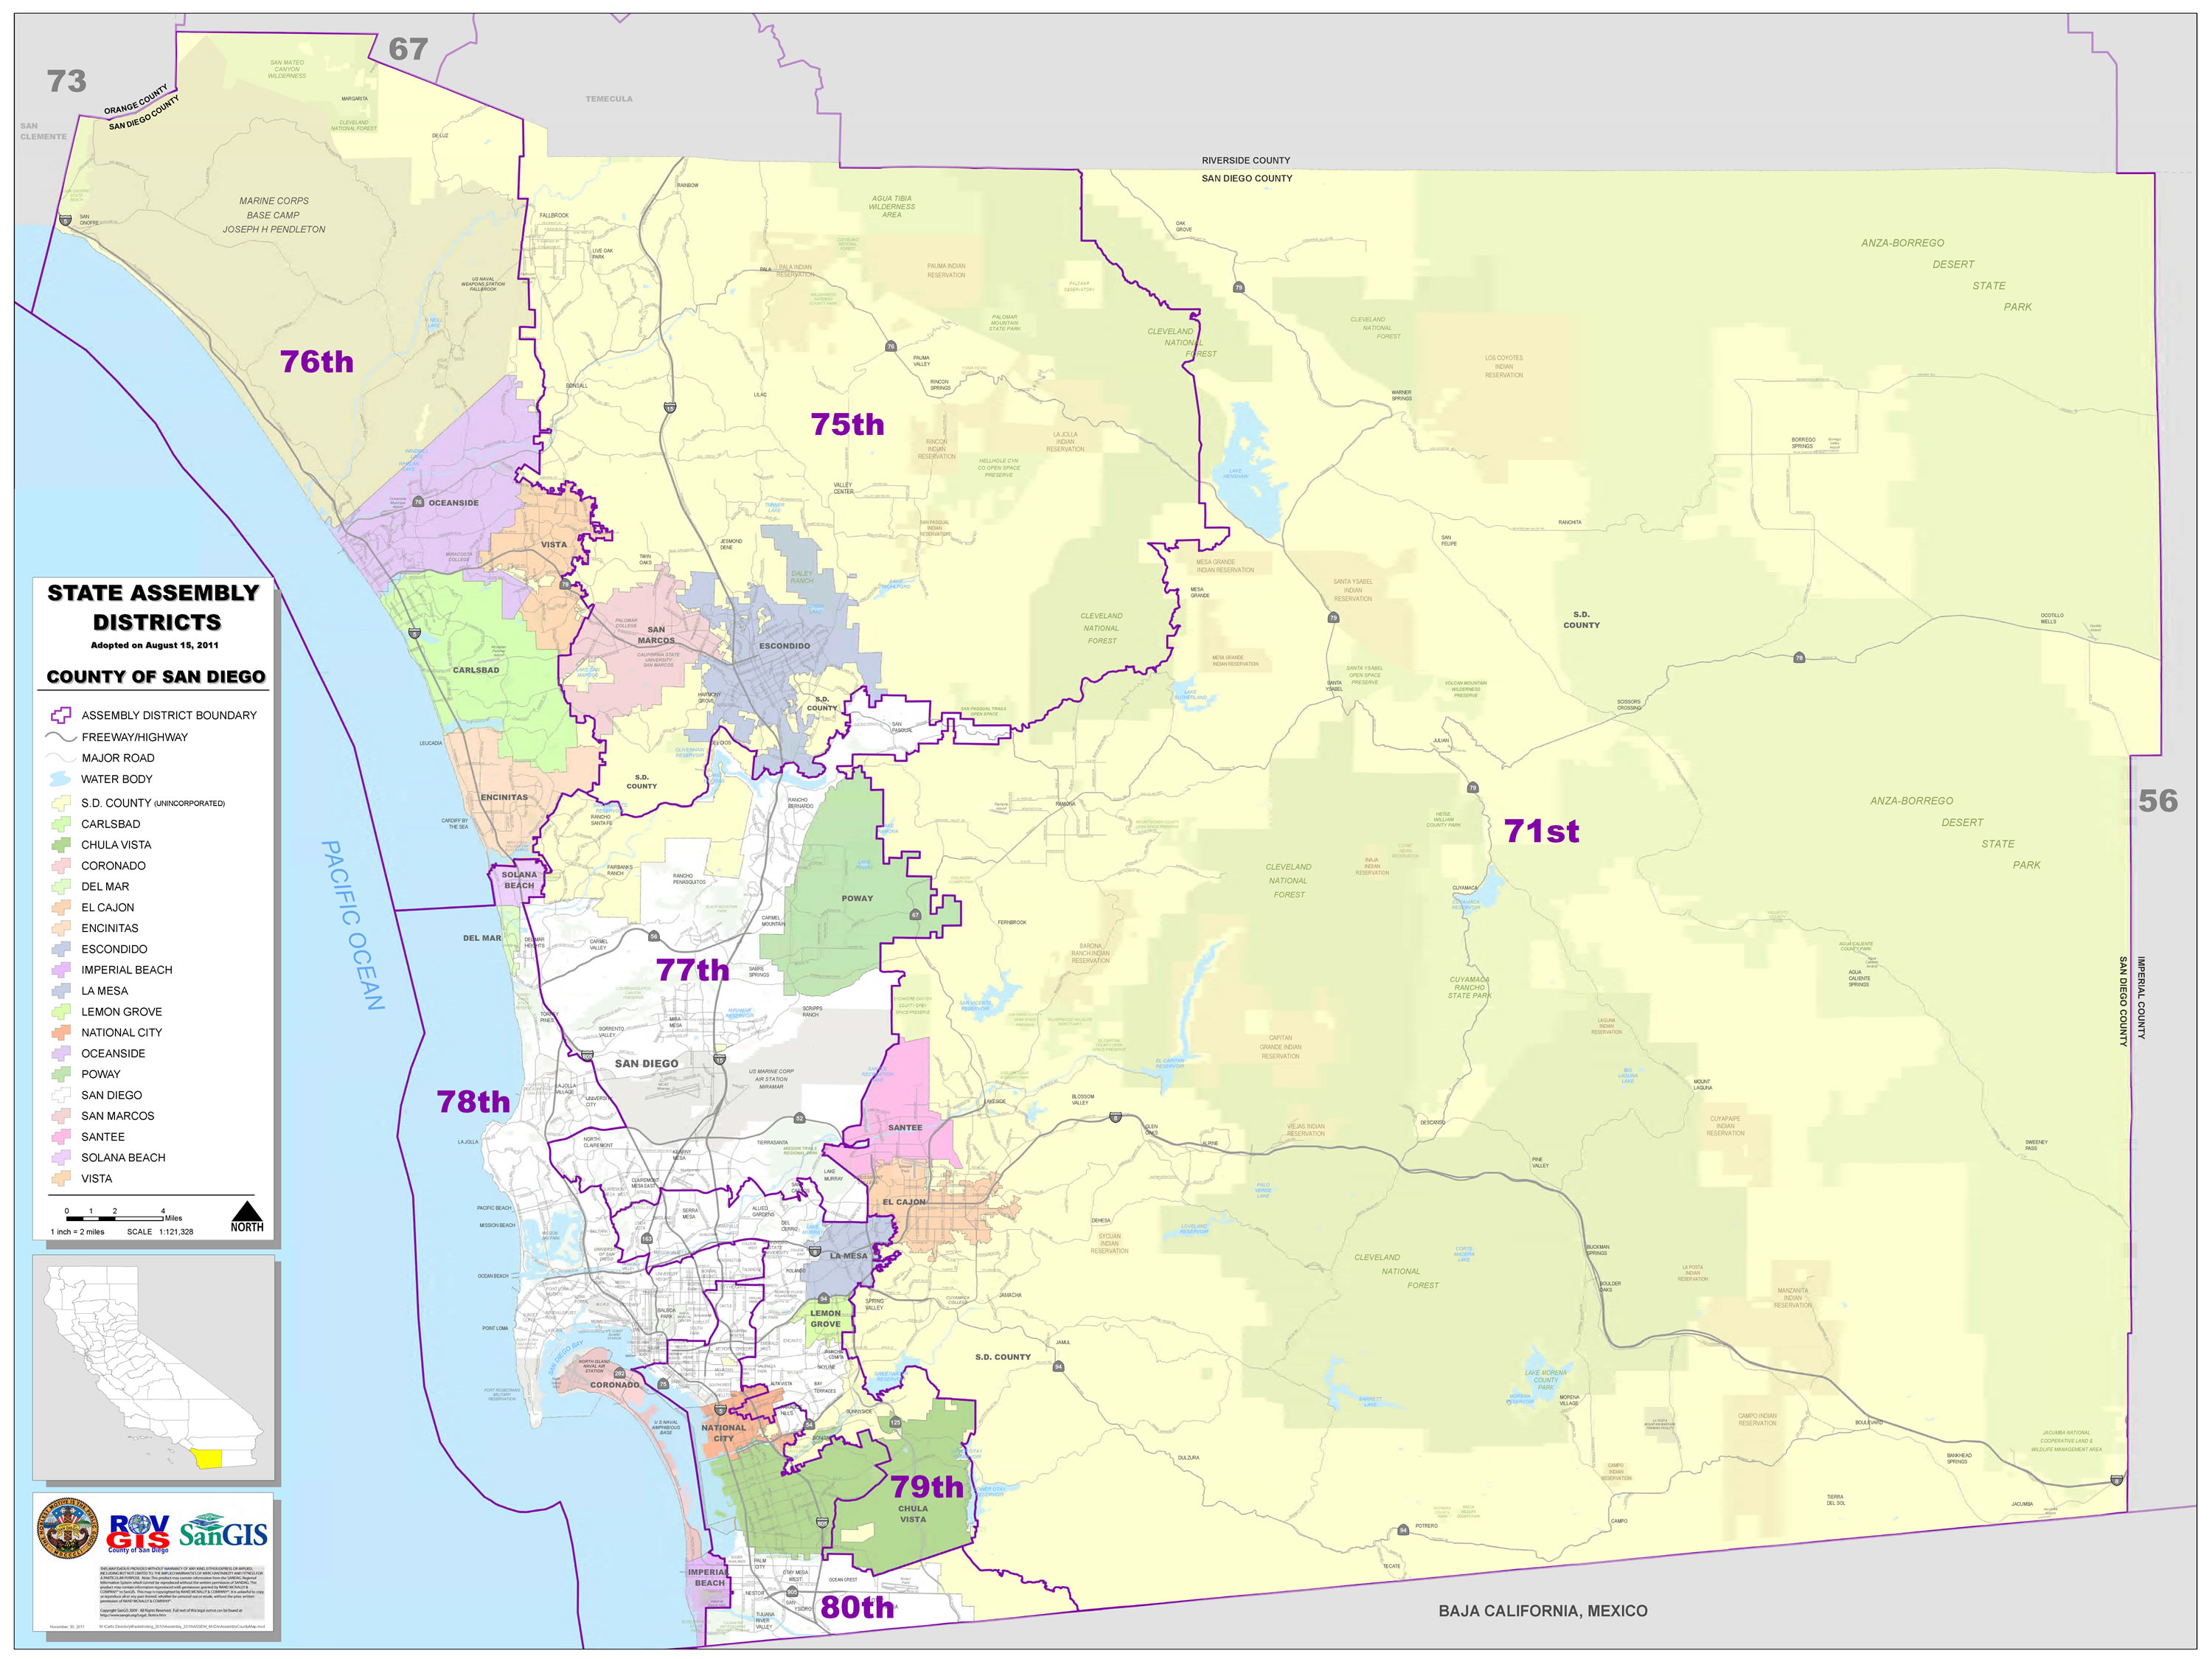 San Diego County Zip Code Map